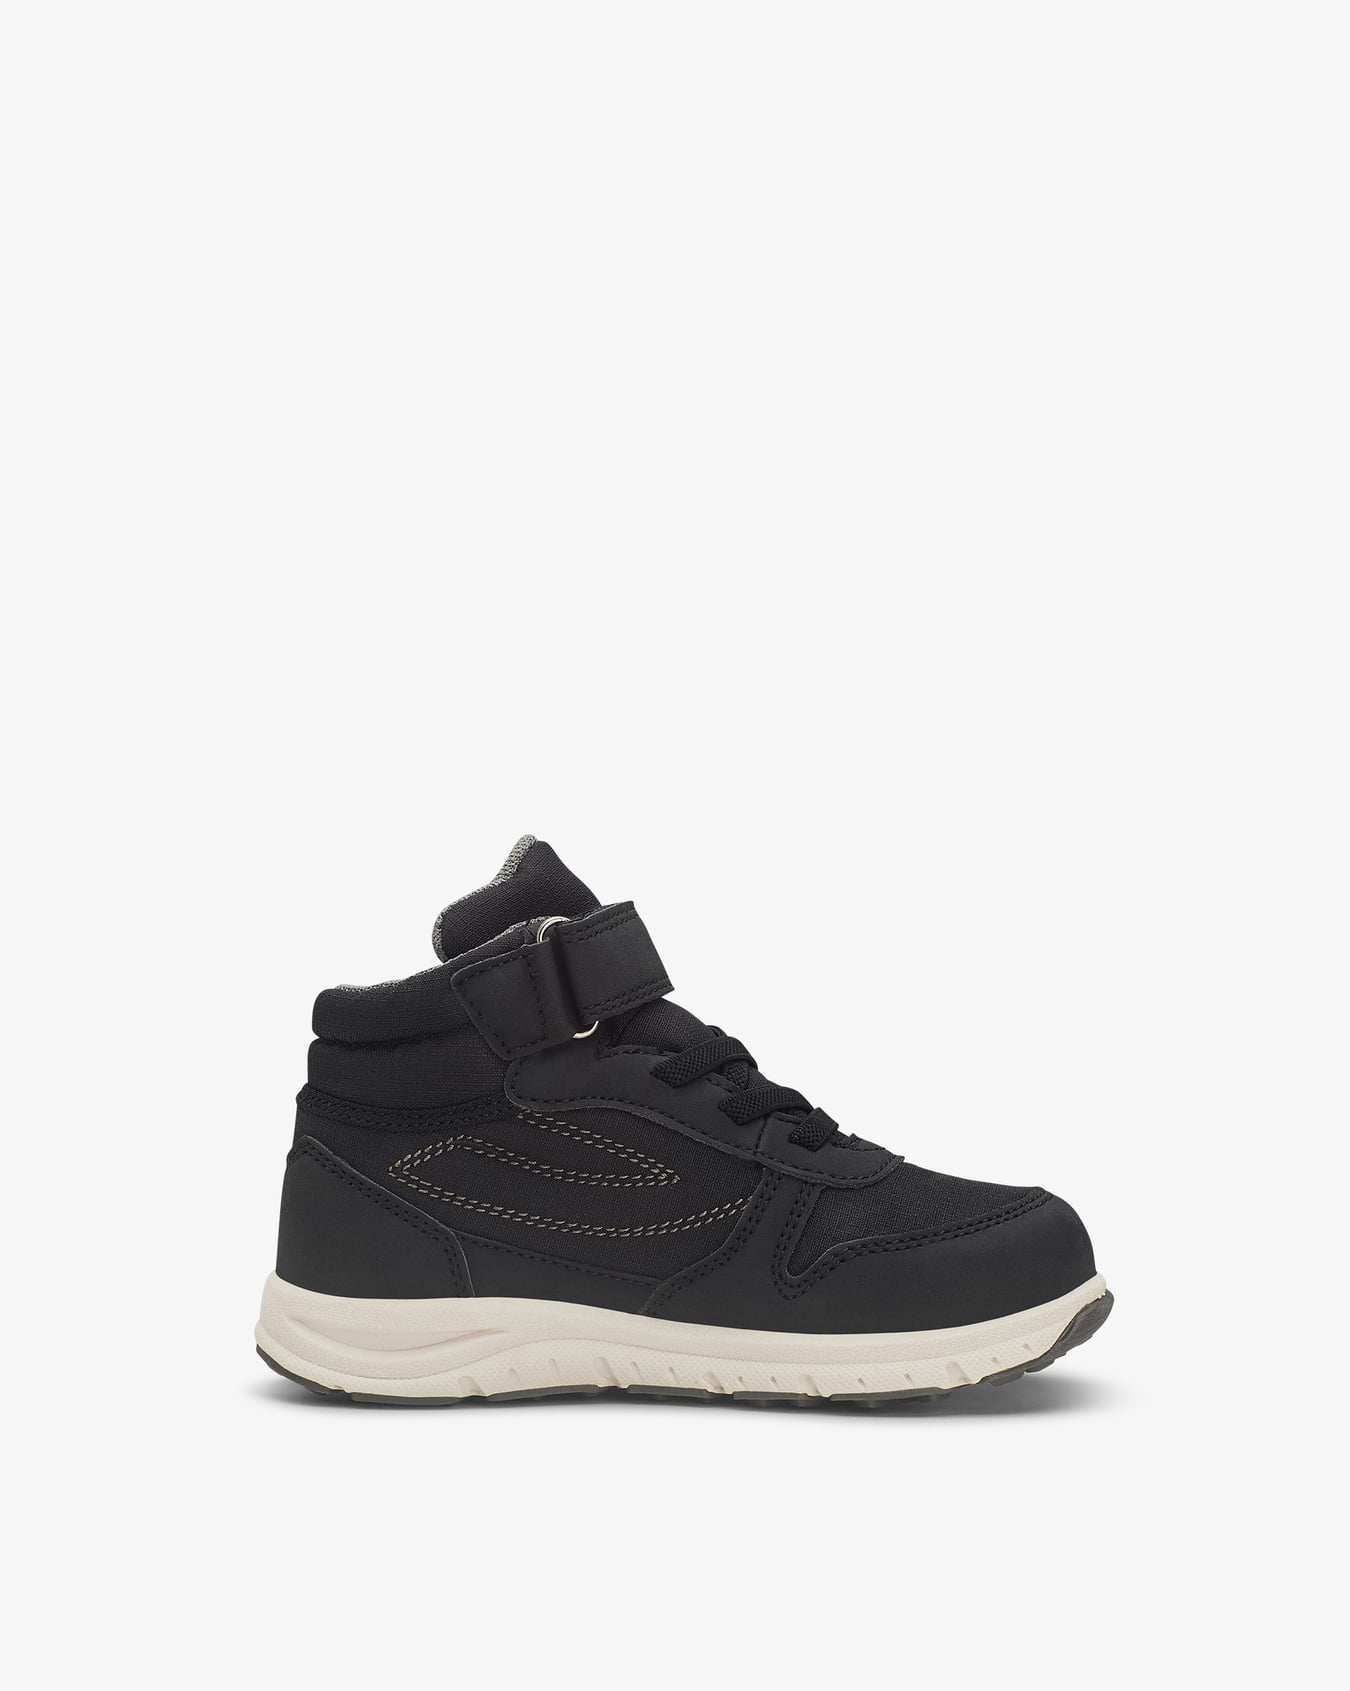 Hovet Mid WP Black/Grey Sneaker